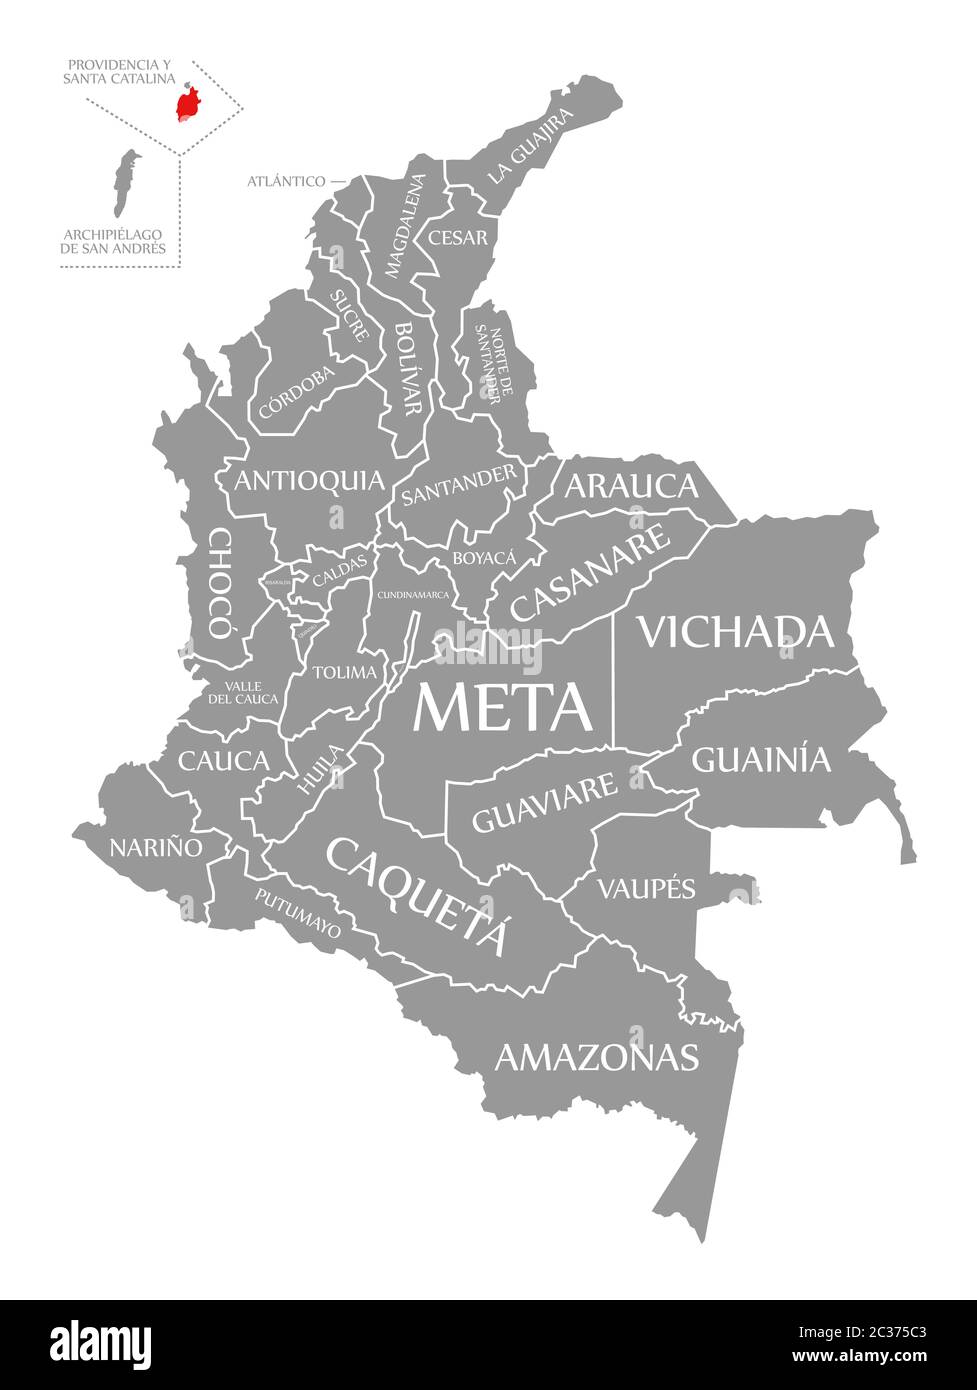 Santa Catalina in Rot hervorgehoben Karte von Kolumbien Stockfoto